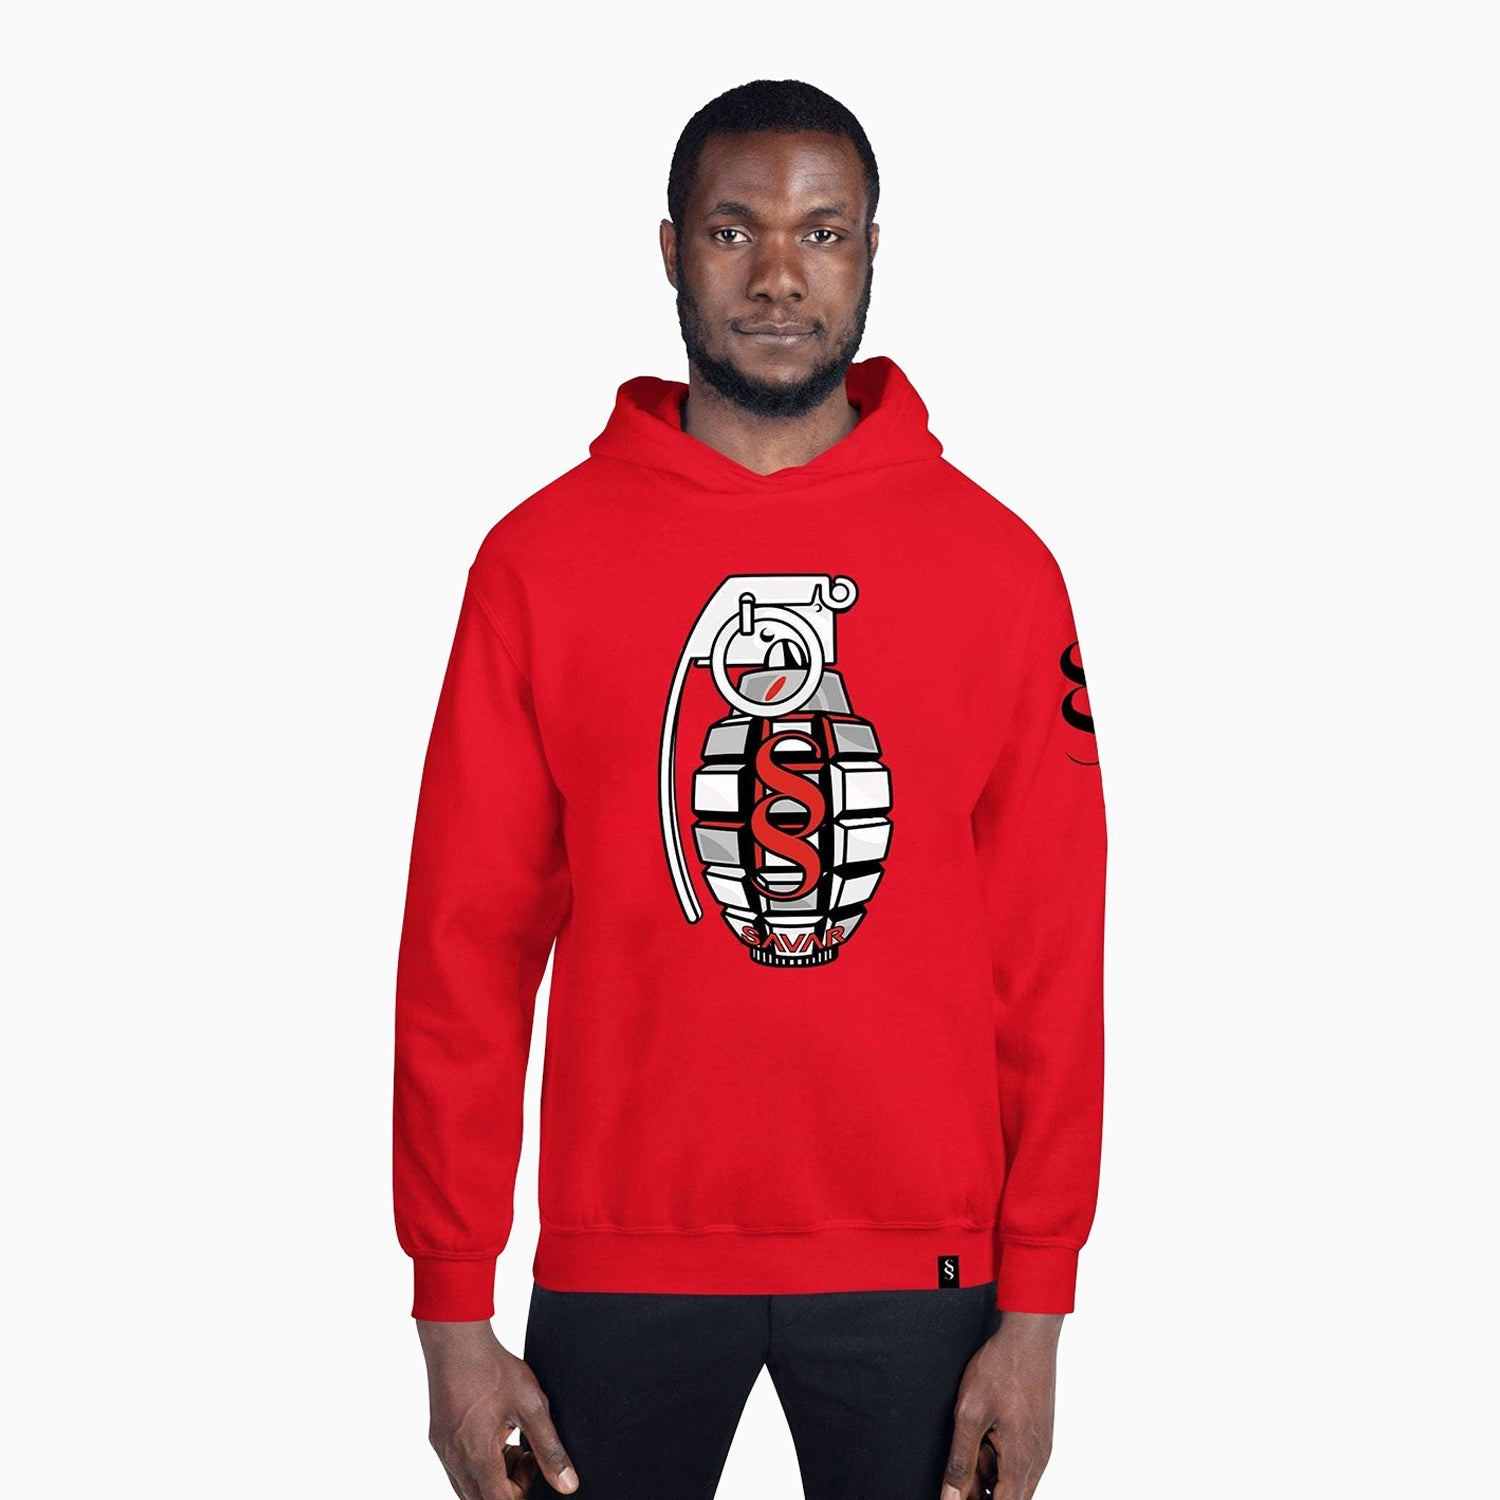 grenade-design-printed-pull-over-red-hoodie-for-men-sh102-657